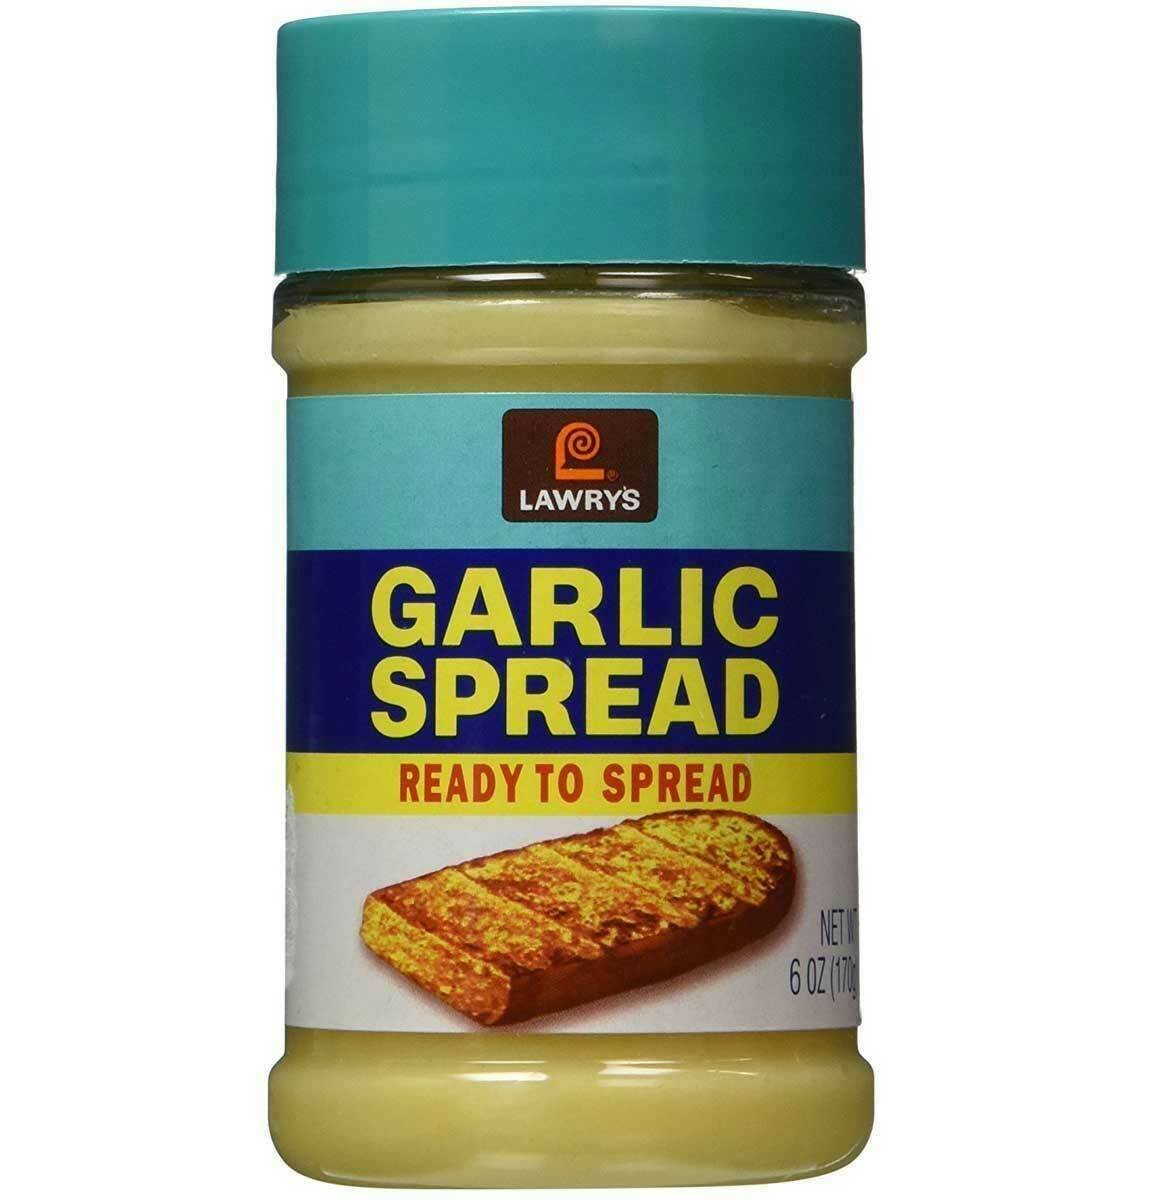 Lawry's Garlic Spread - Ready to Spread - Size 6oz - New - FREE/FAST S&H